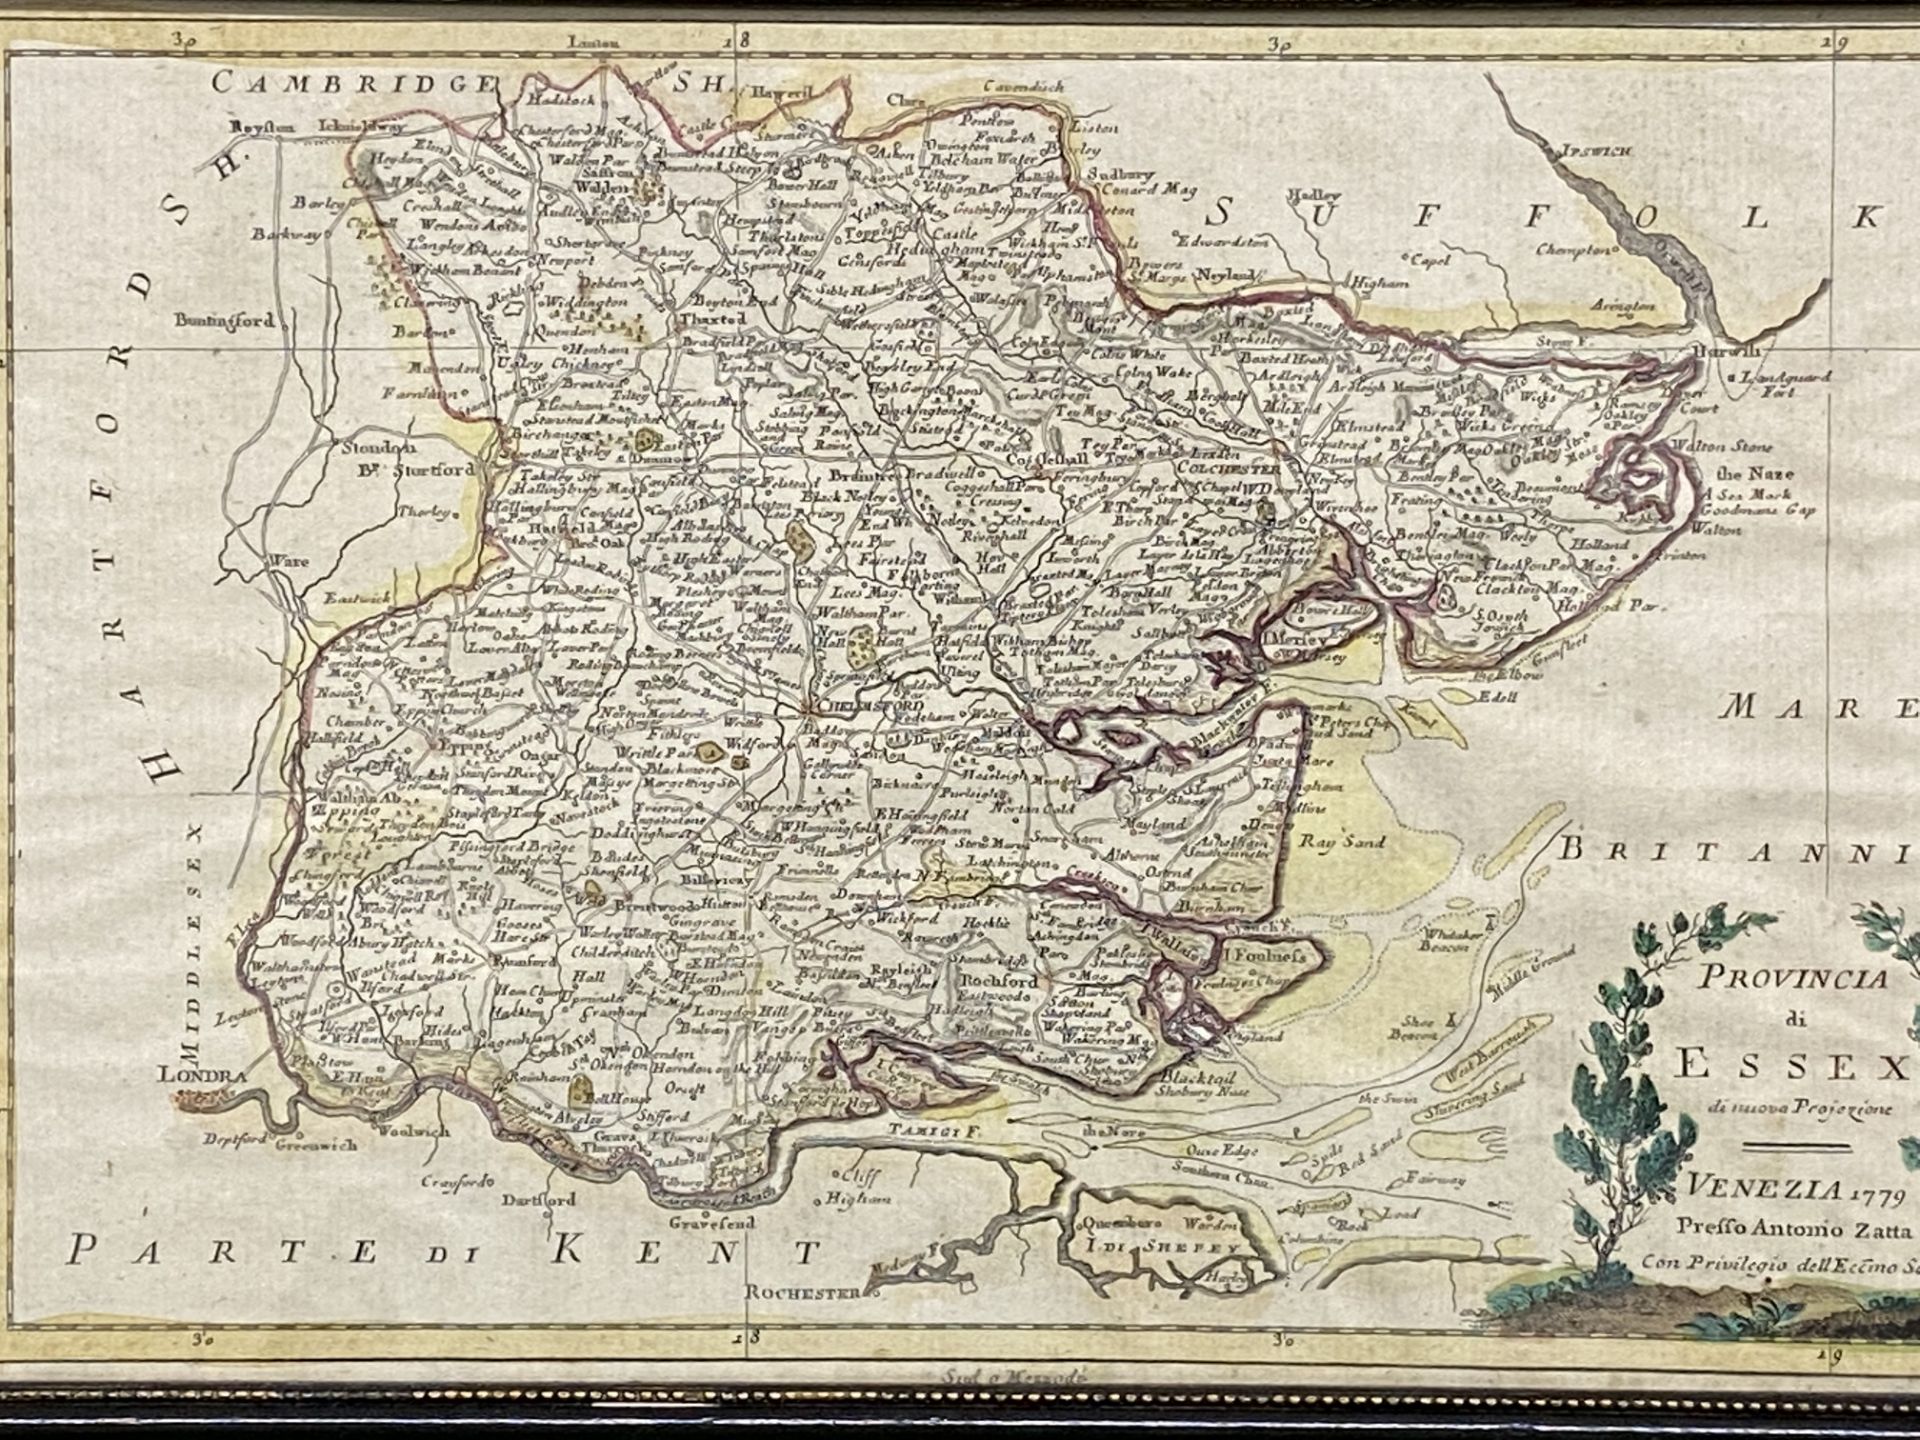 Italian map of Essex, dated 1779